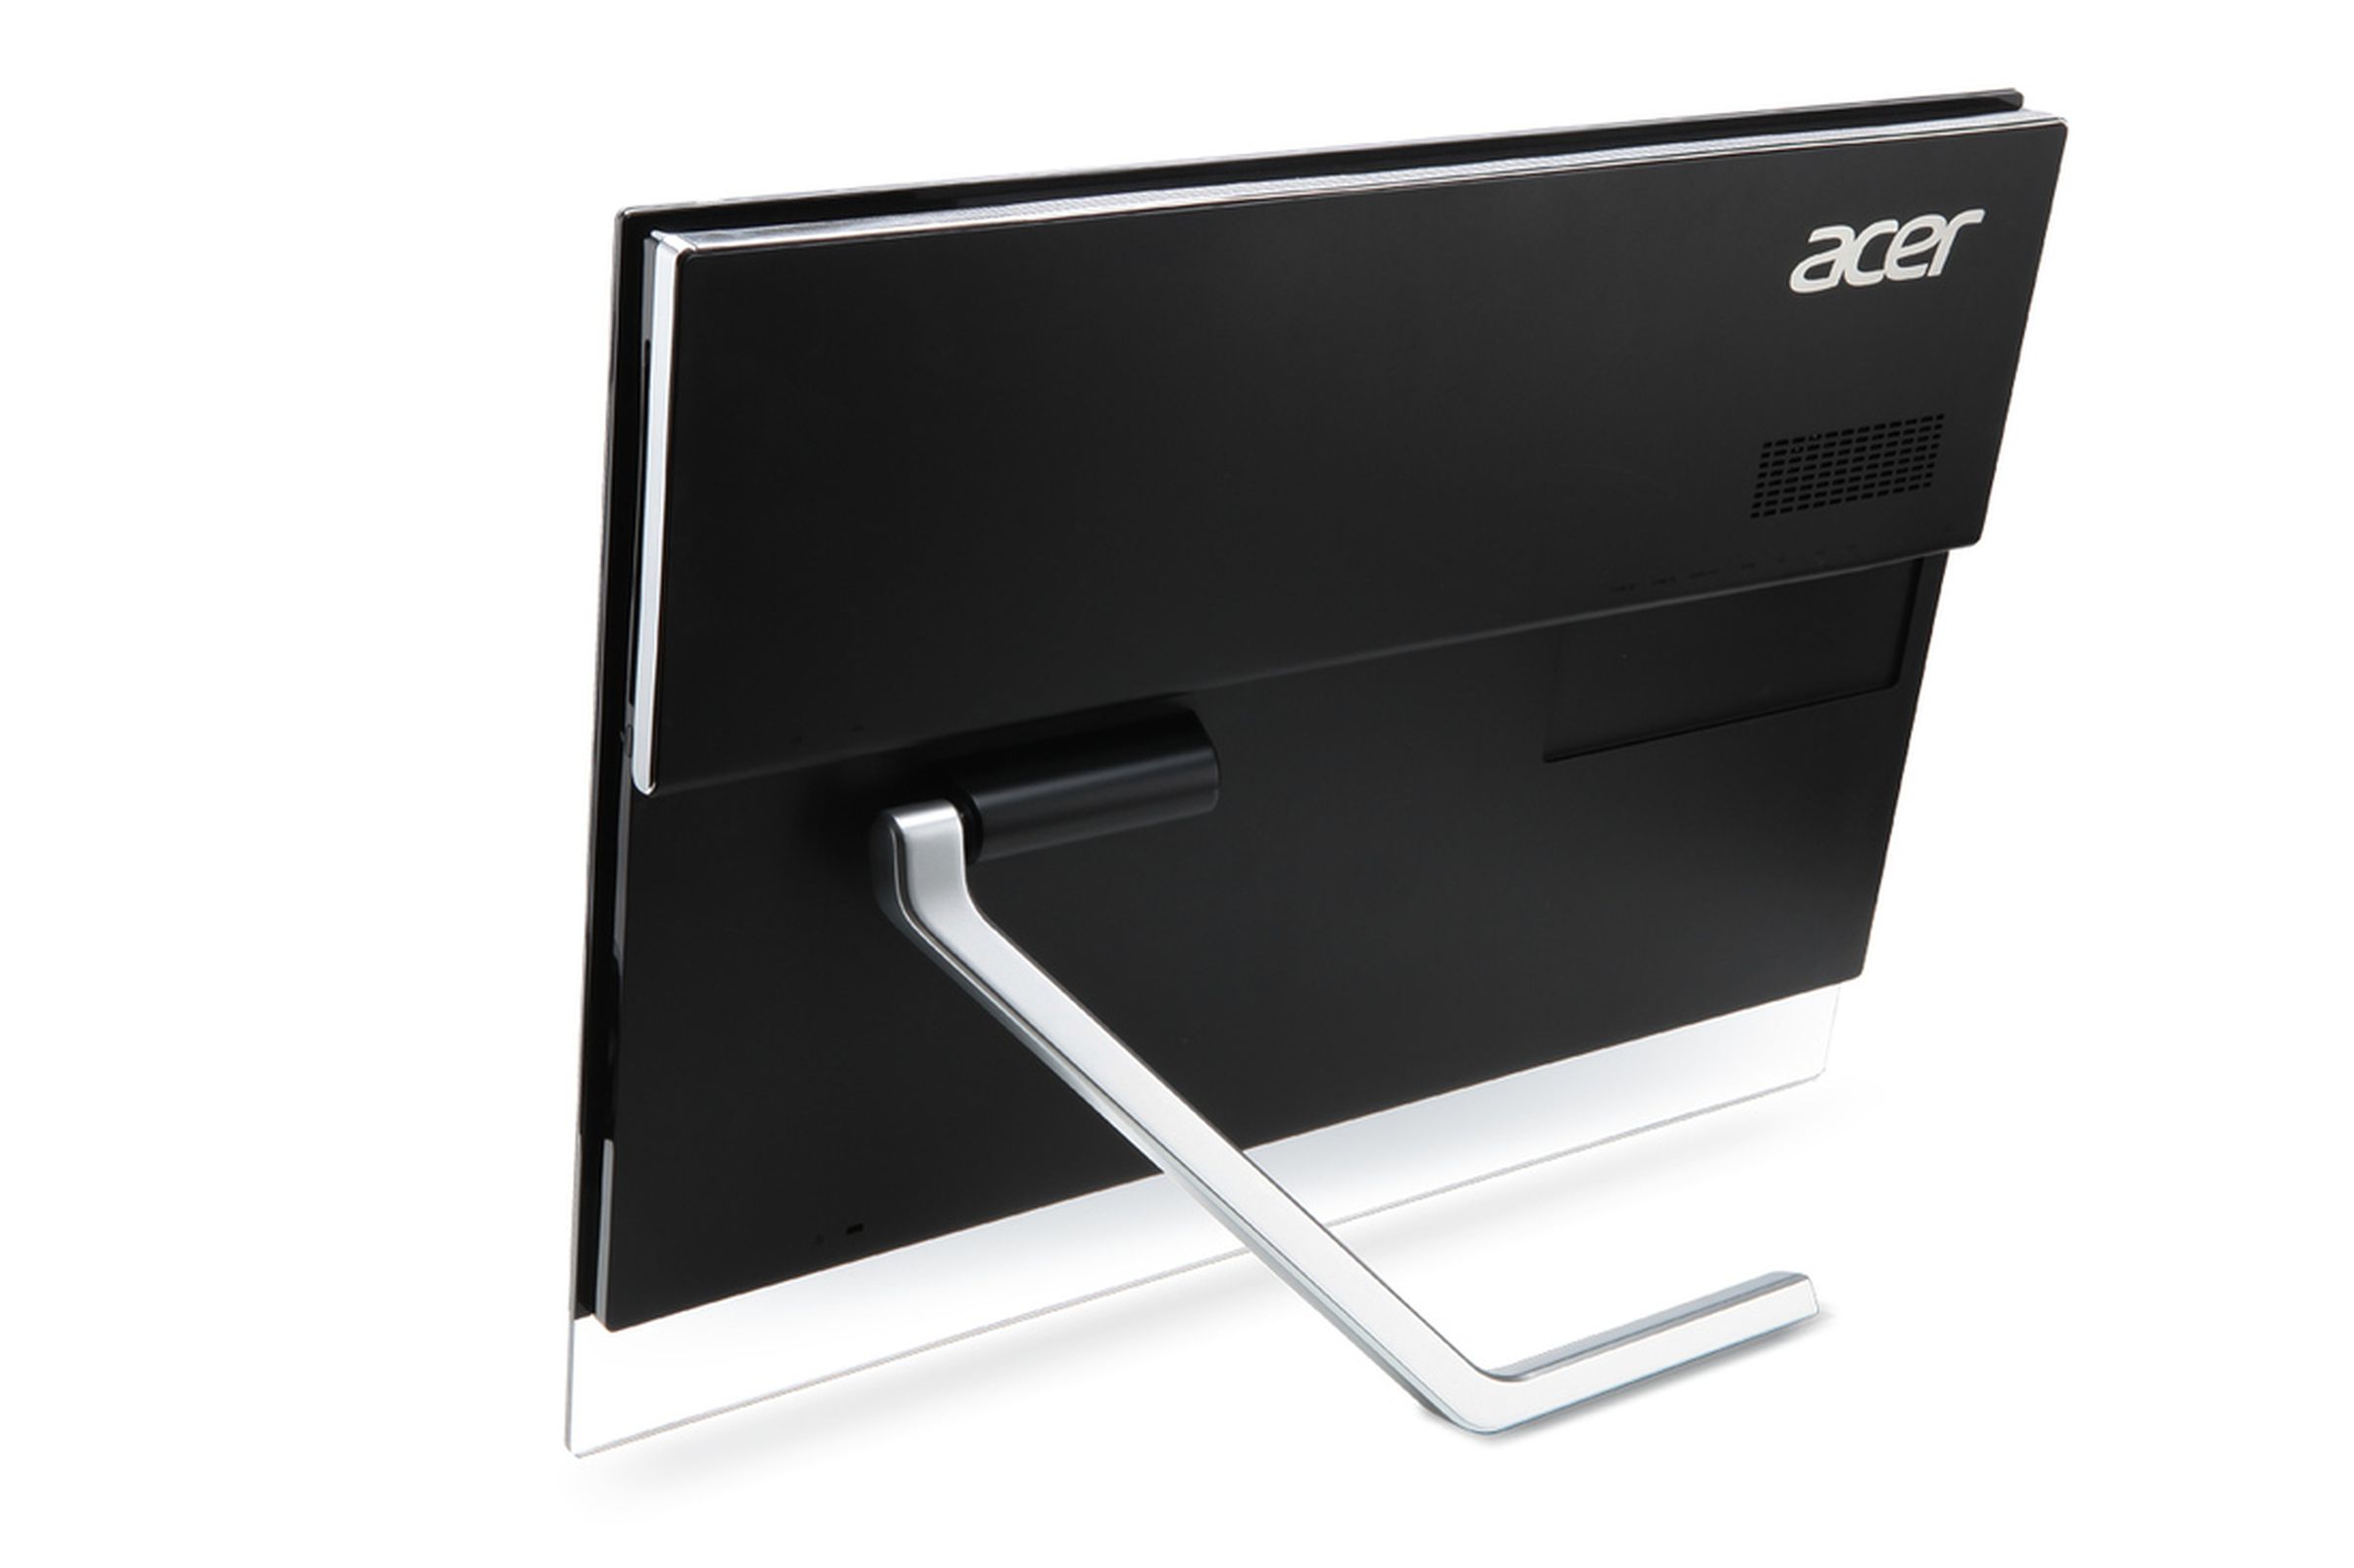 Acer Aspire 7600U Press Images